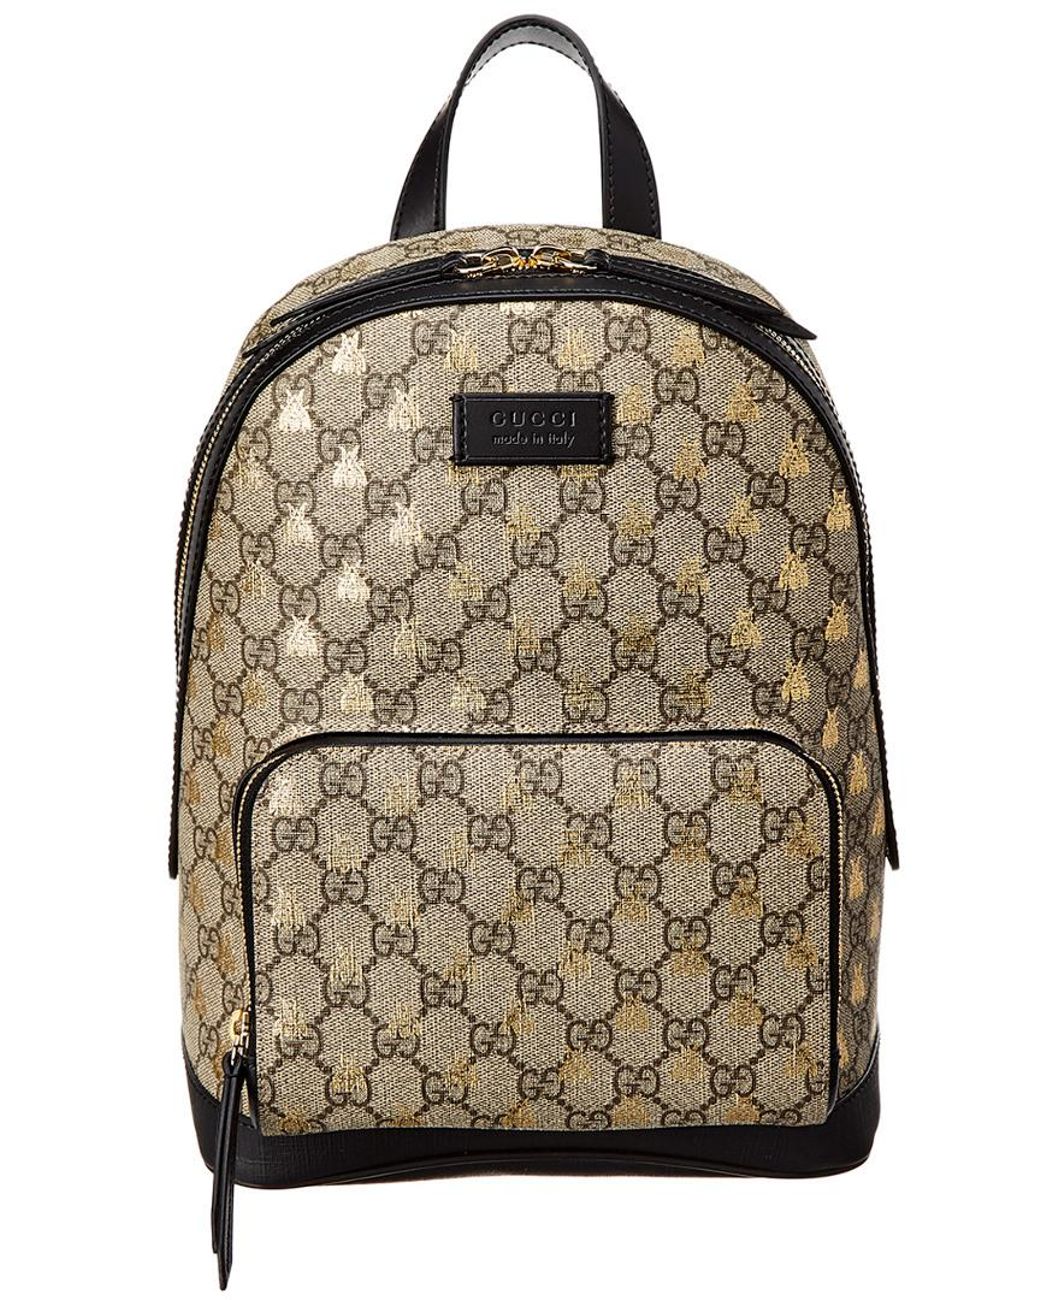 Gucci Gg Supreme Bee-print Backpack in Brown | Lyst Australia